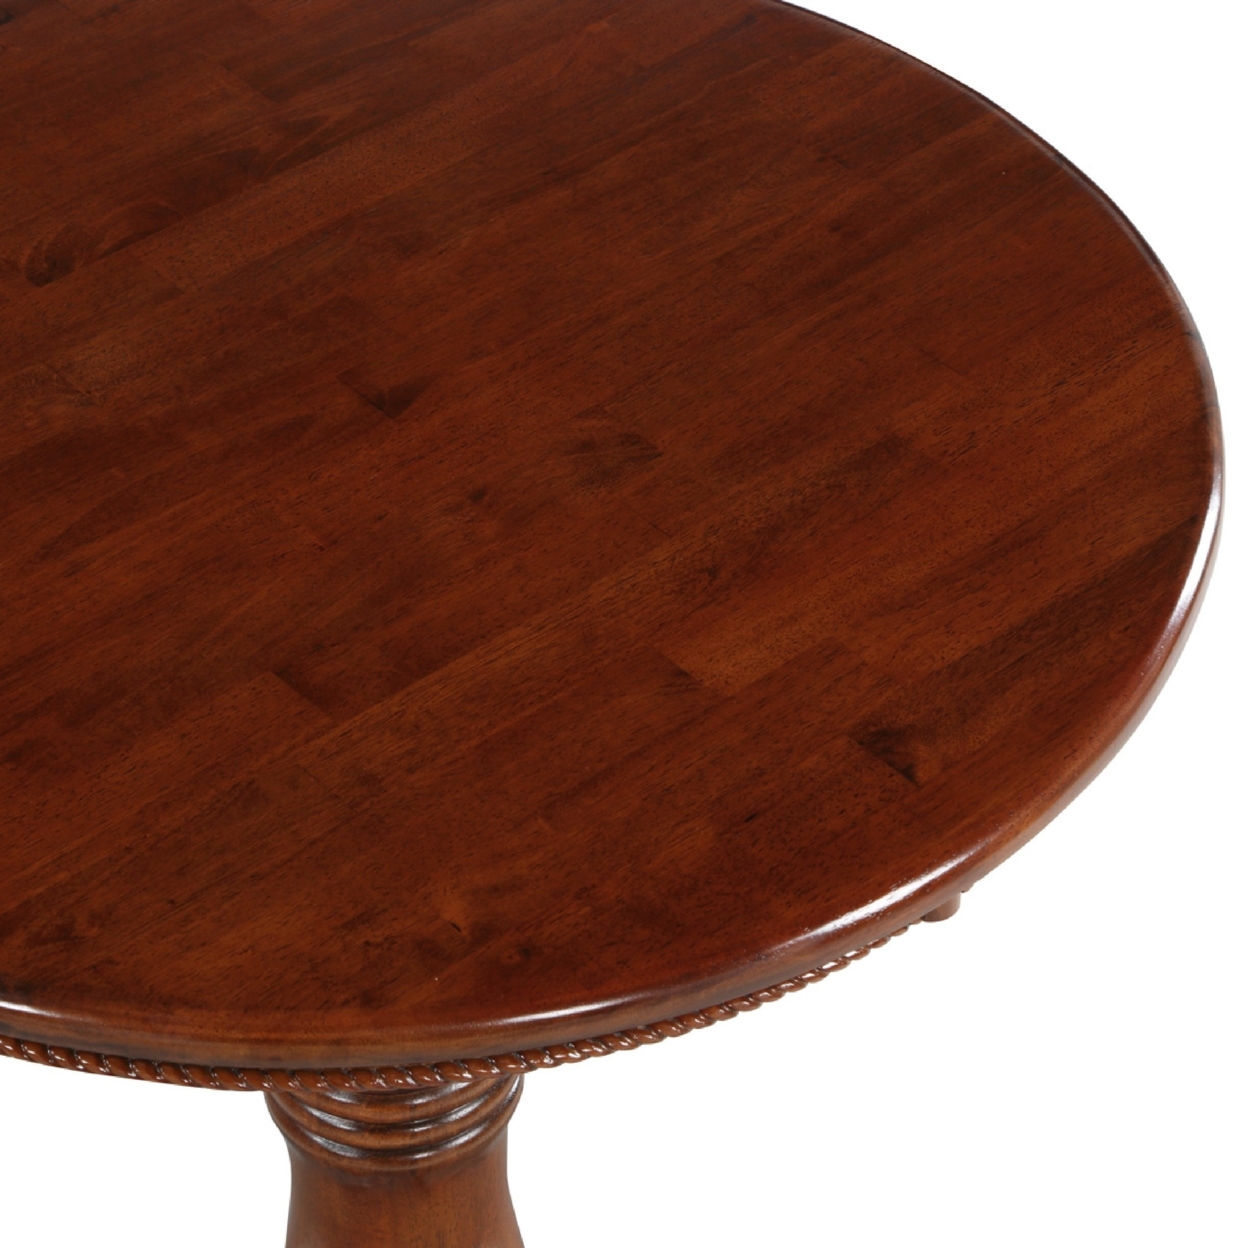 32 Inch Round Pub Bar Table, Classic Turned Pedestal, MDF Wood, Walnut Brown- Saltoro Sherpi